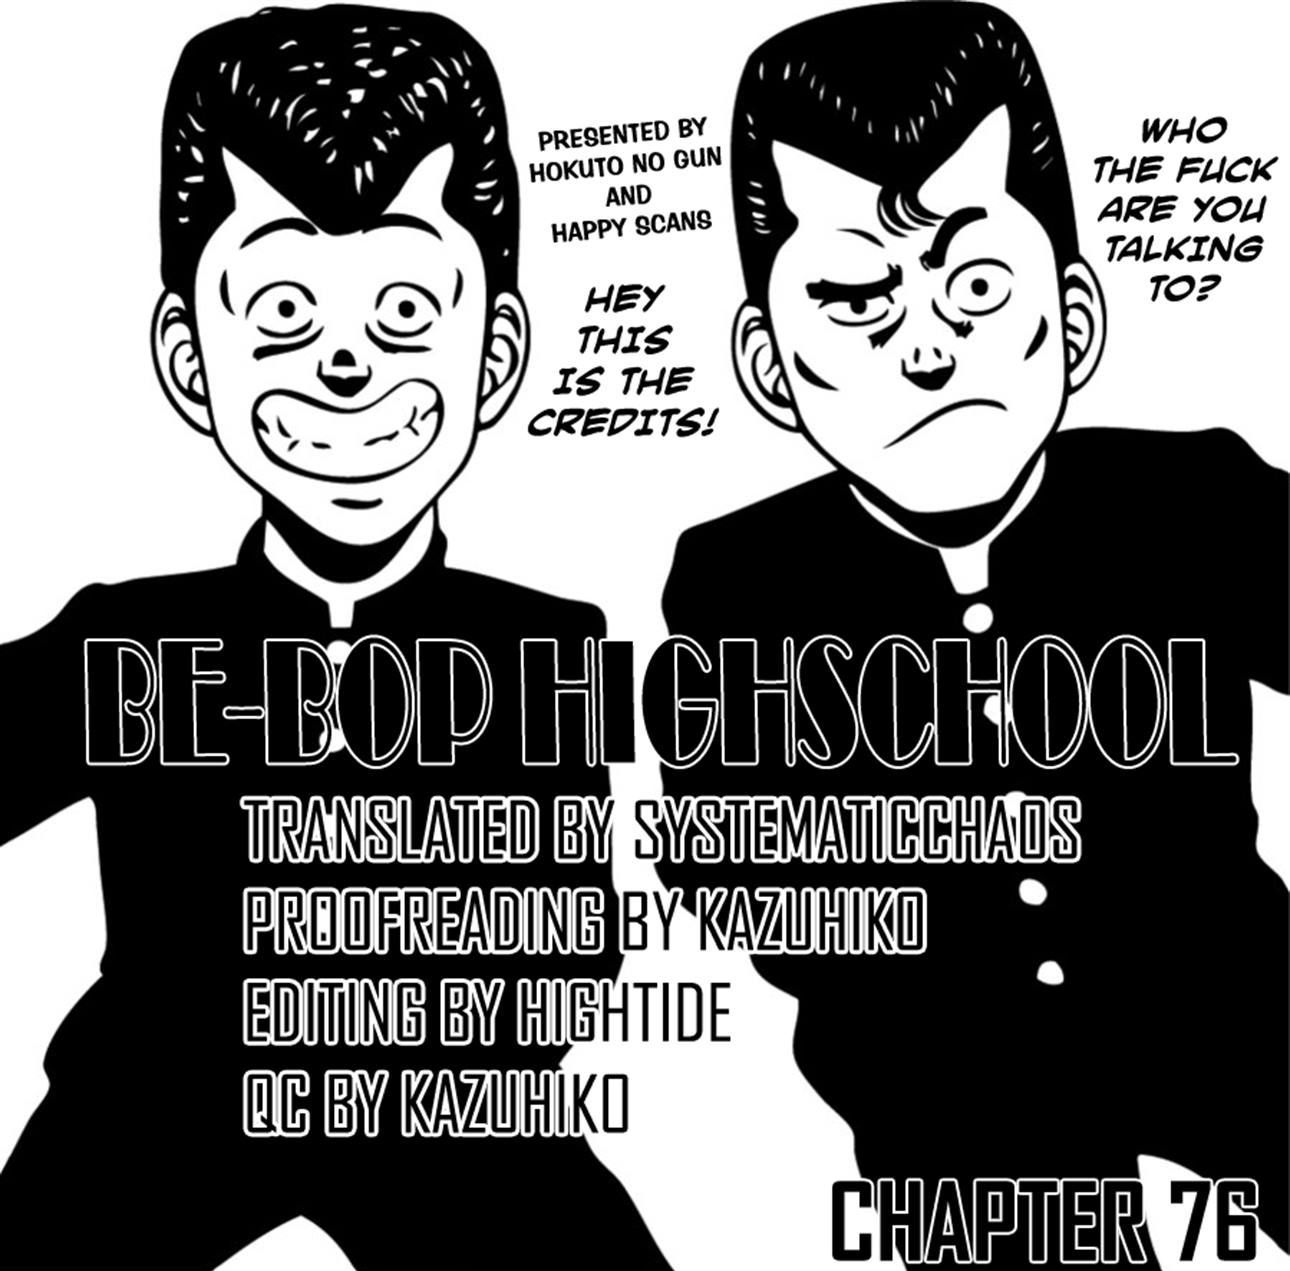 Be-Bop-Highschool 76